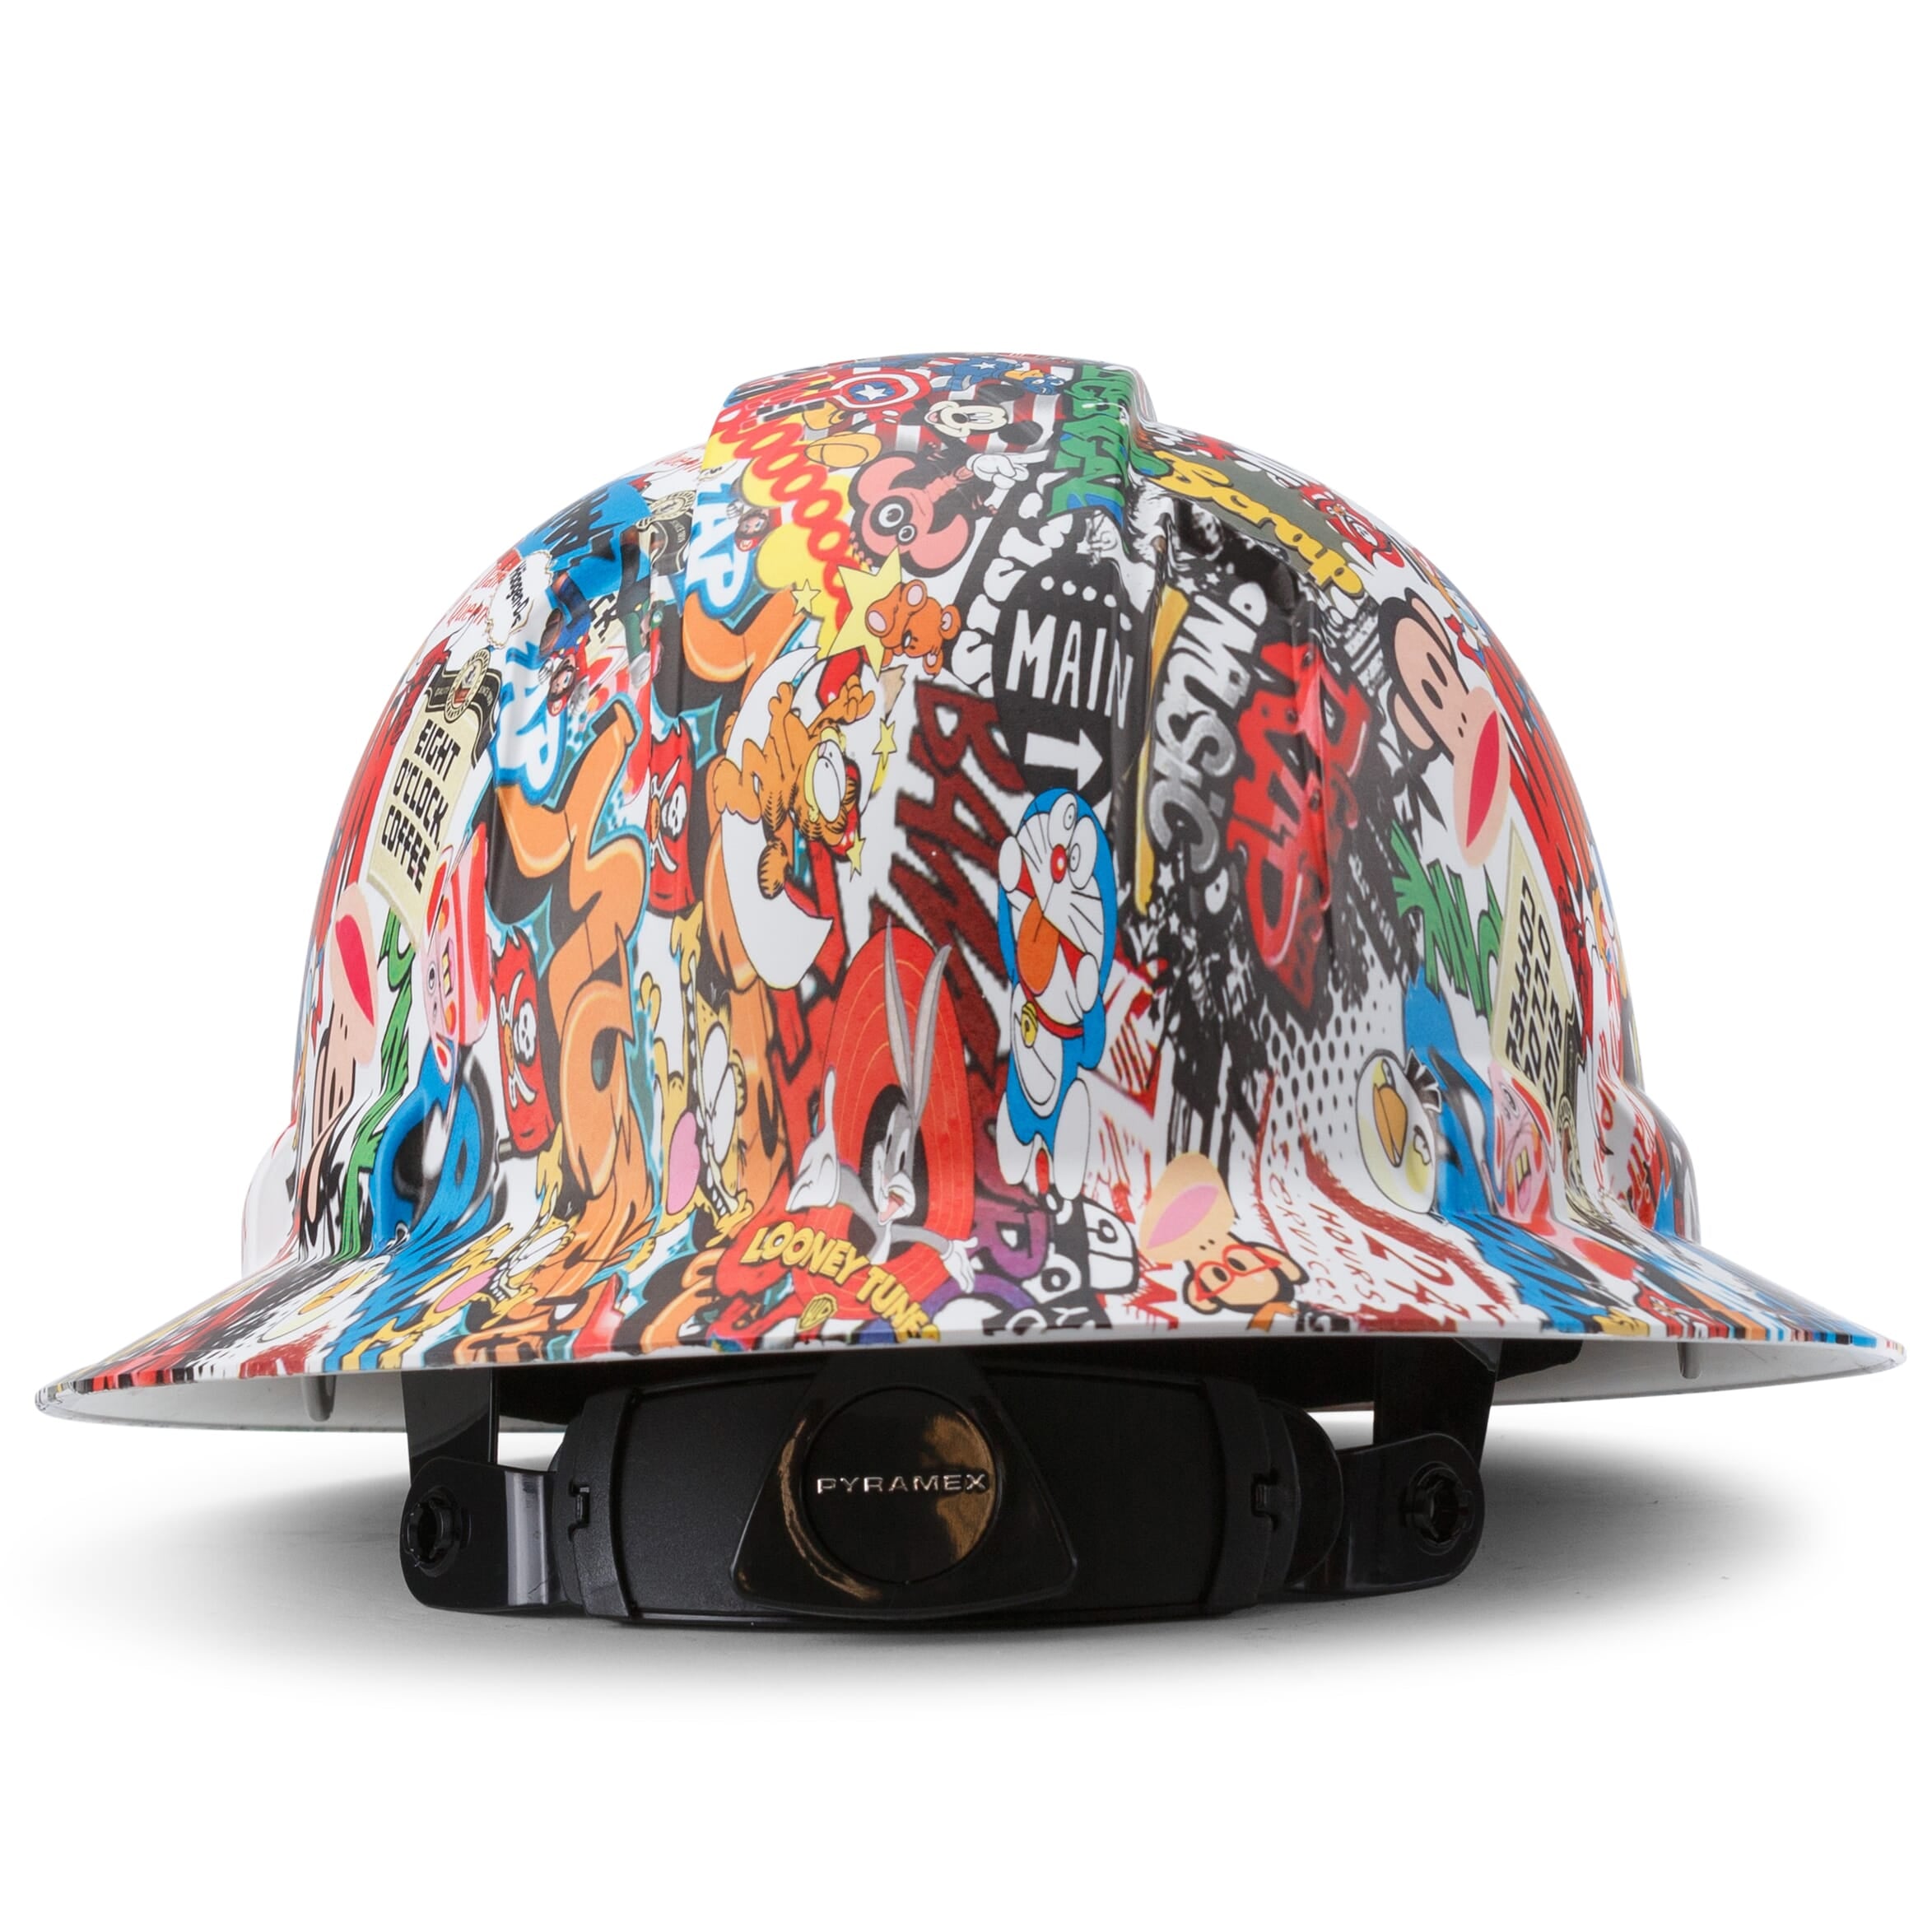 Full Brim Pyramex Hard Hat, Custom Logorama Design, Safety Helmet, 6 Point